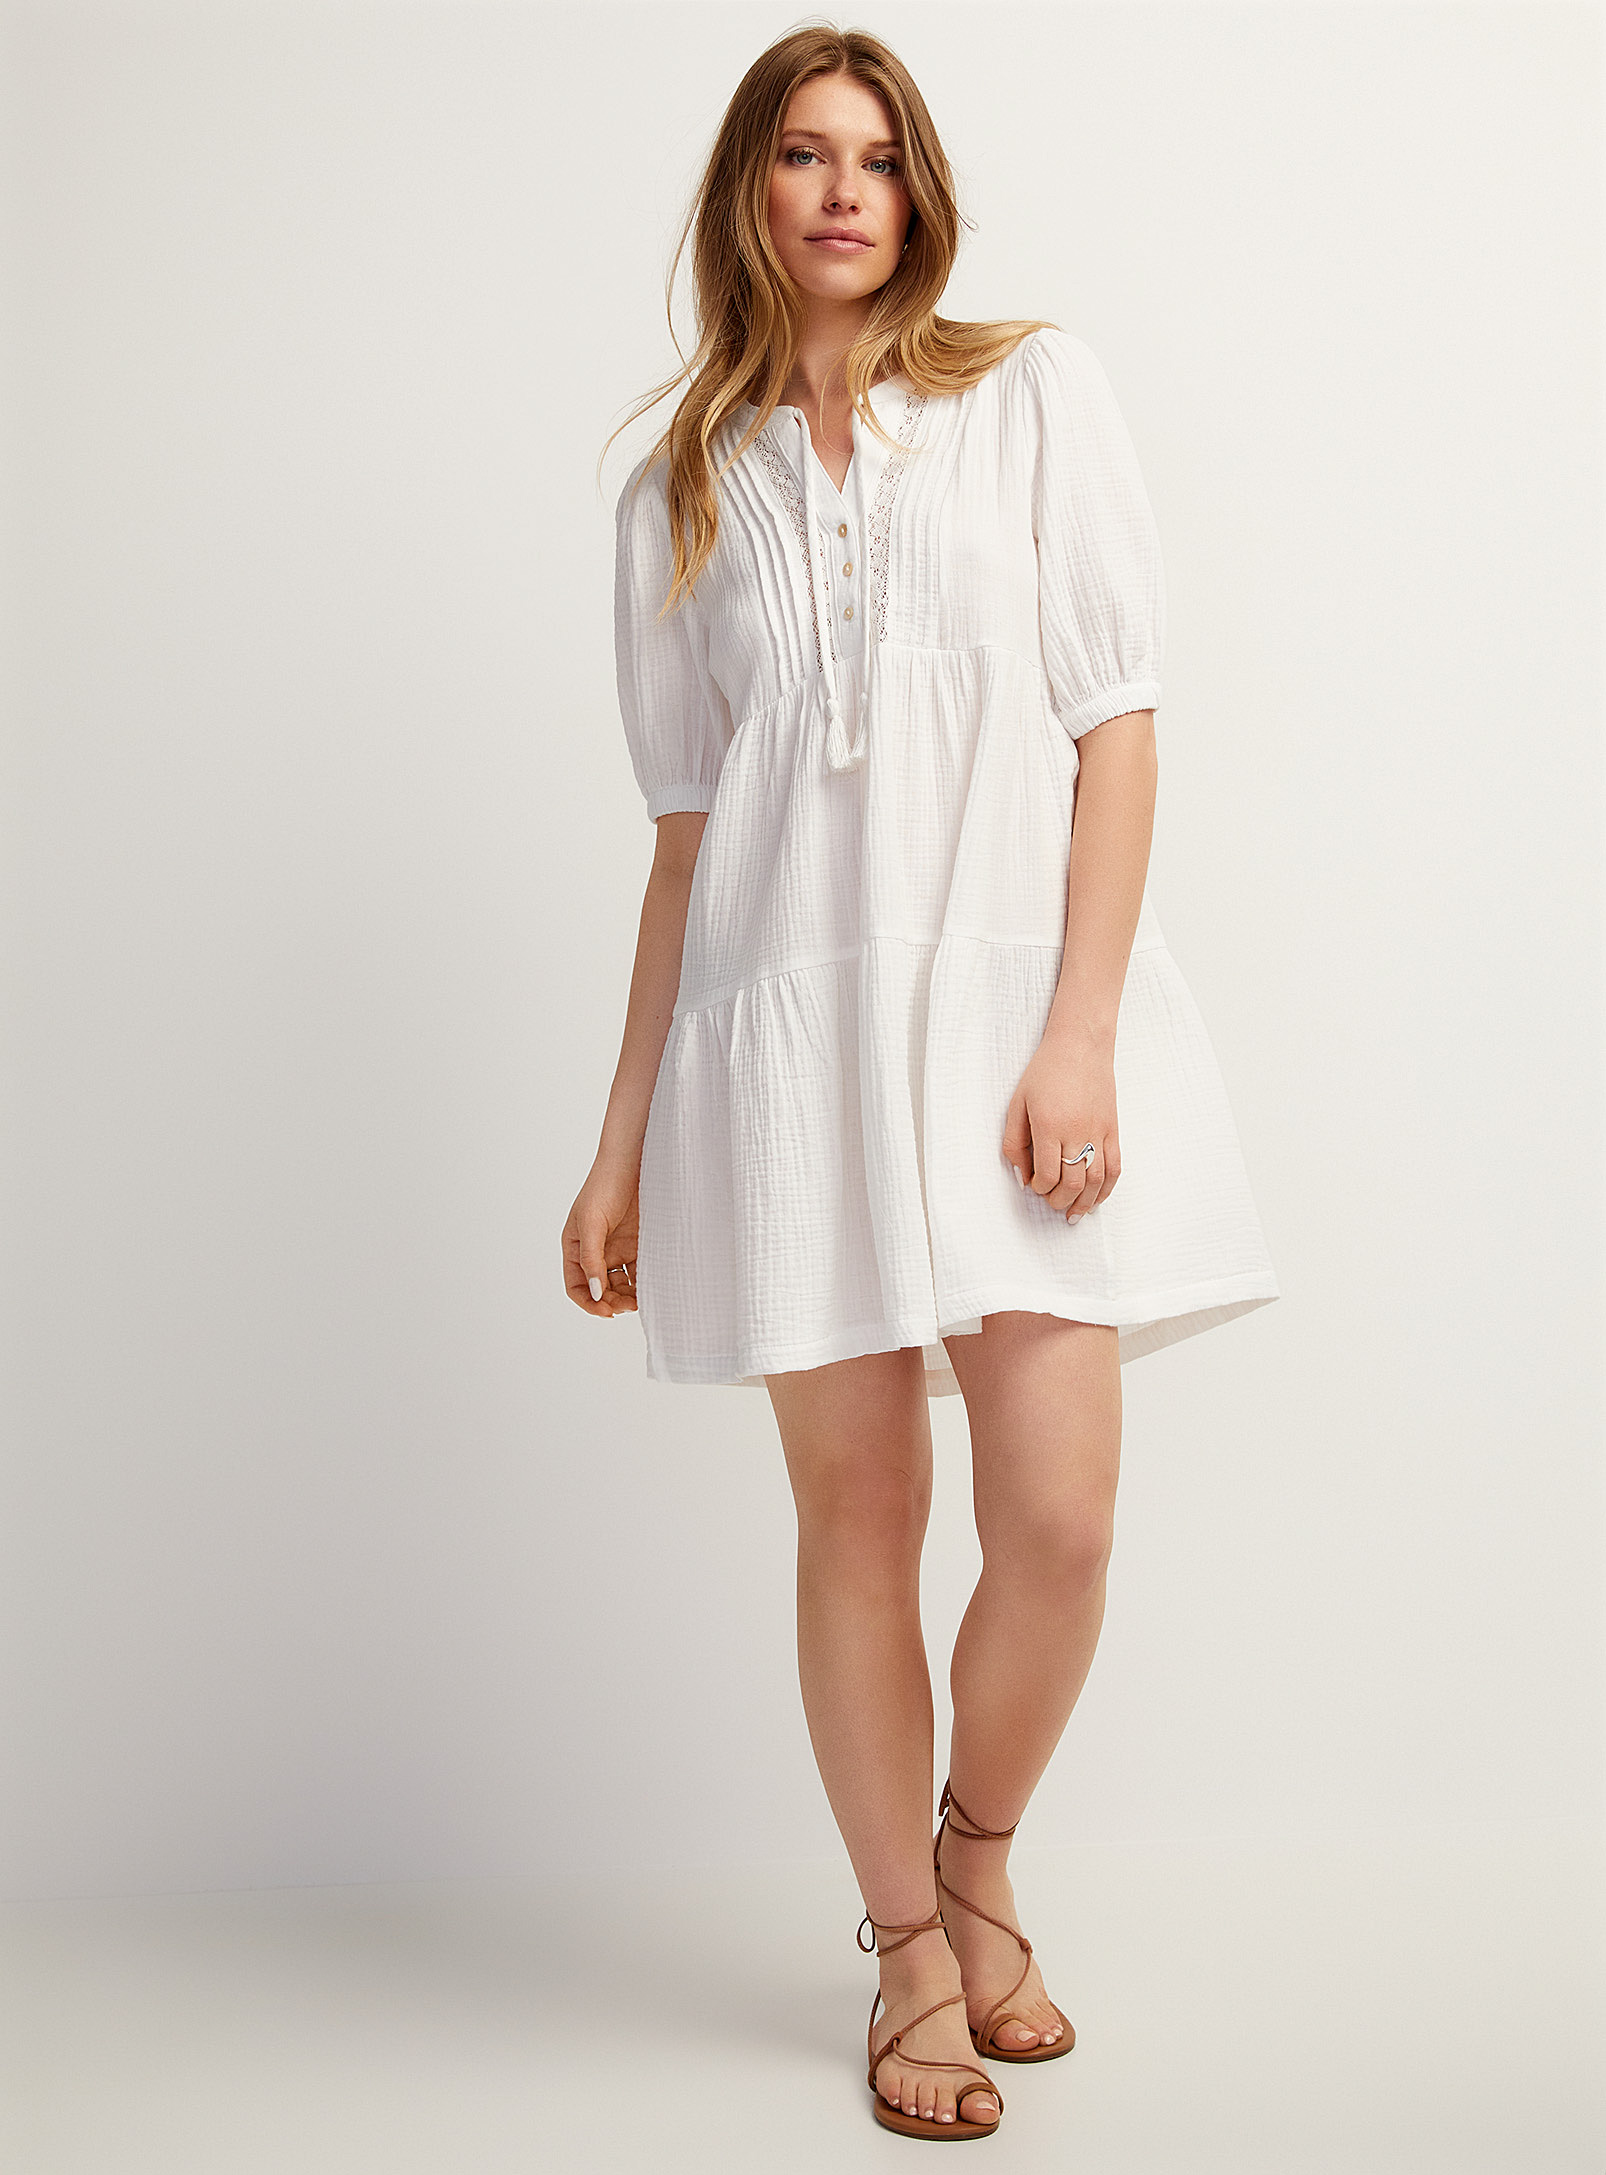 Vero Moda - Women's Cotton gauze white tiered dress